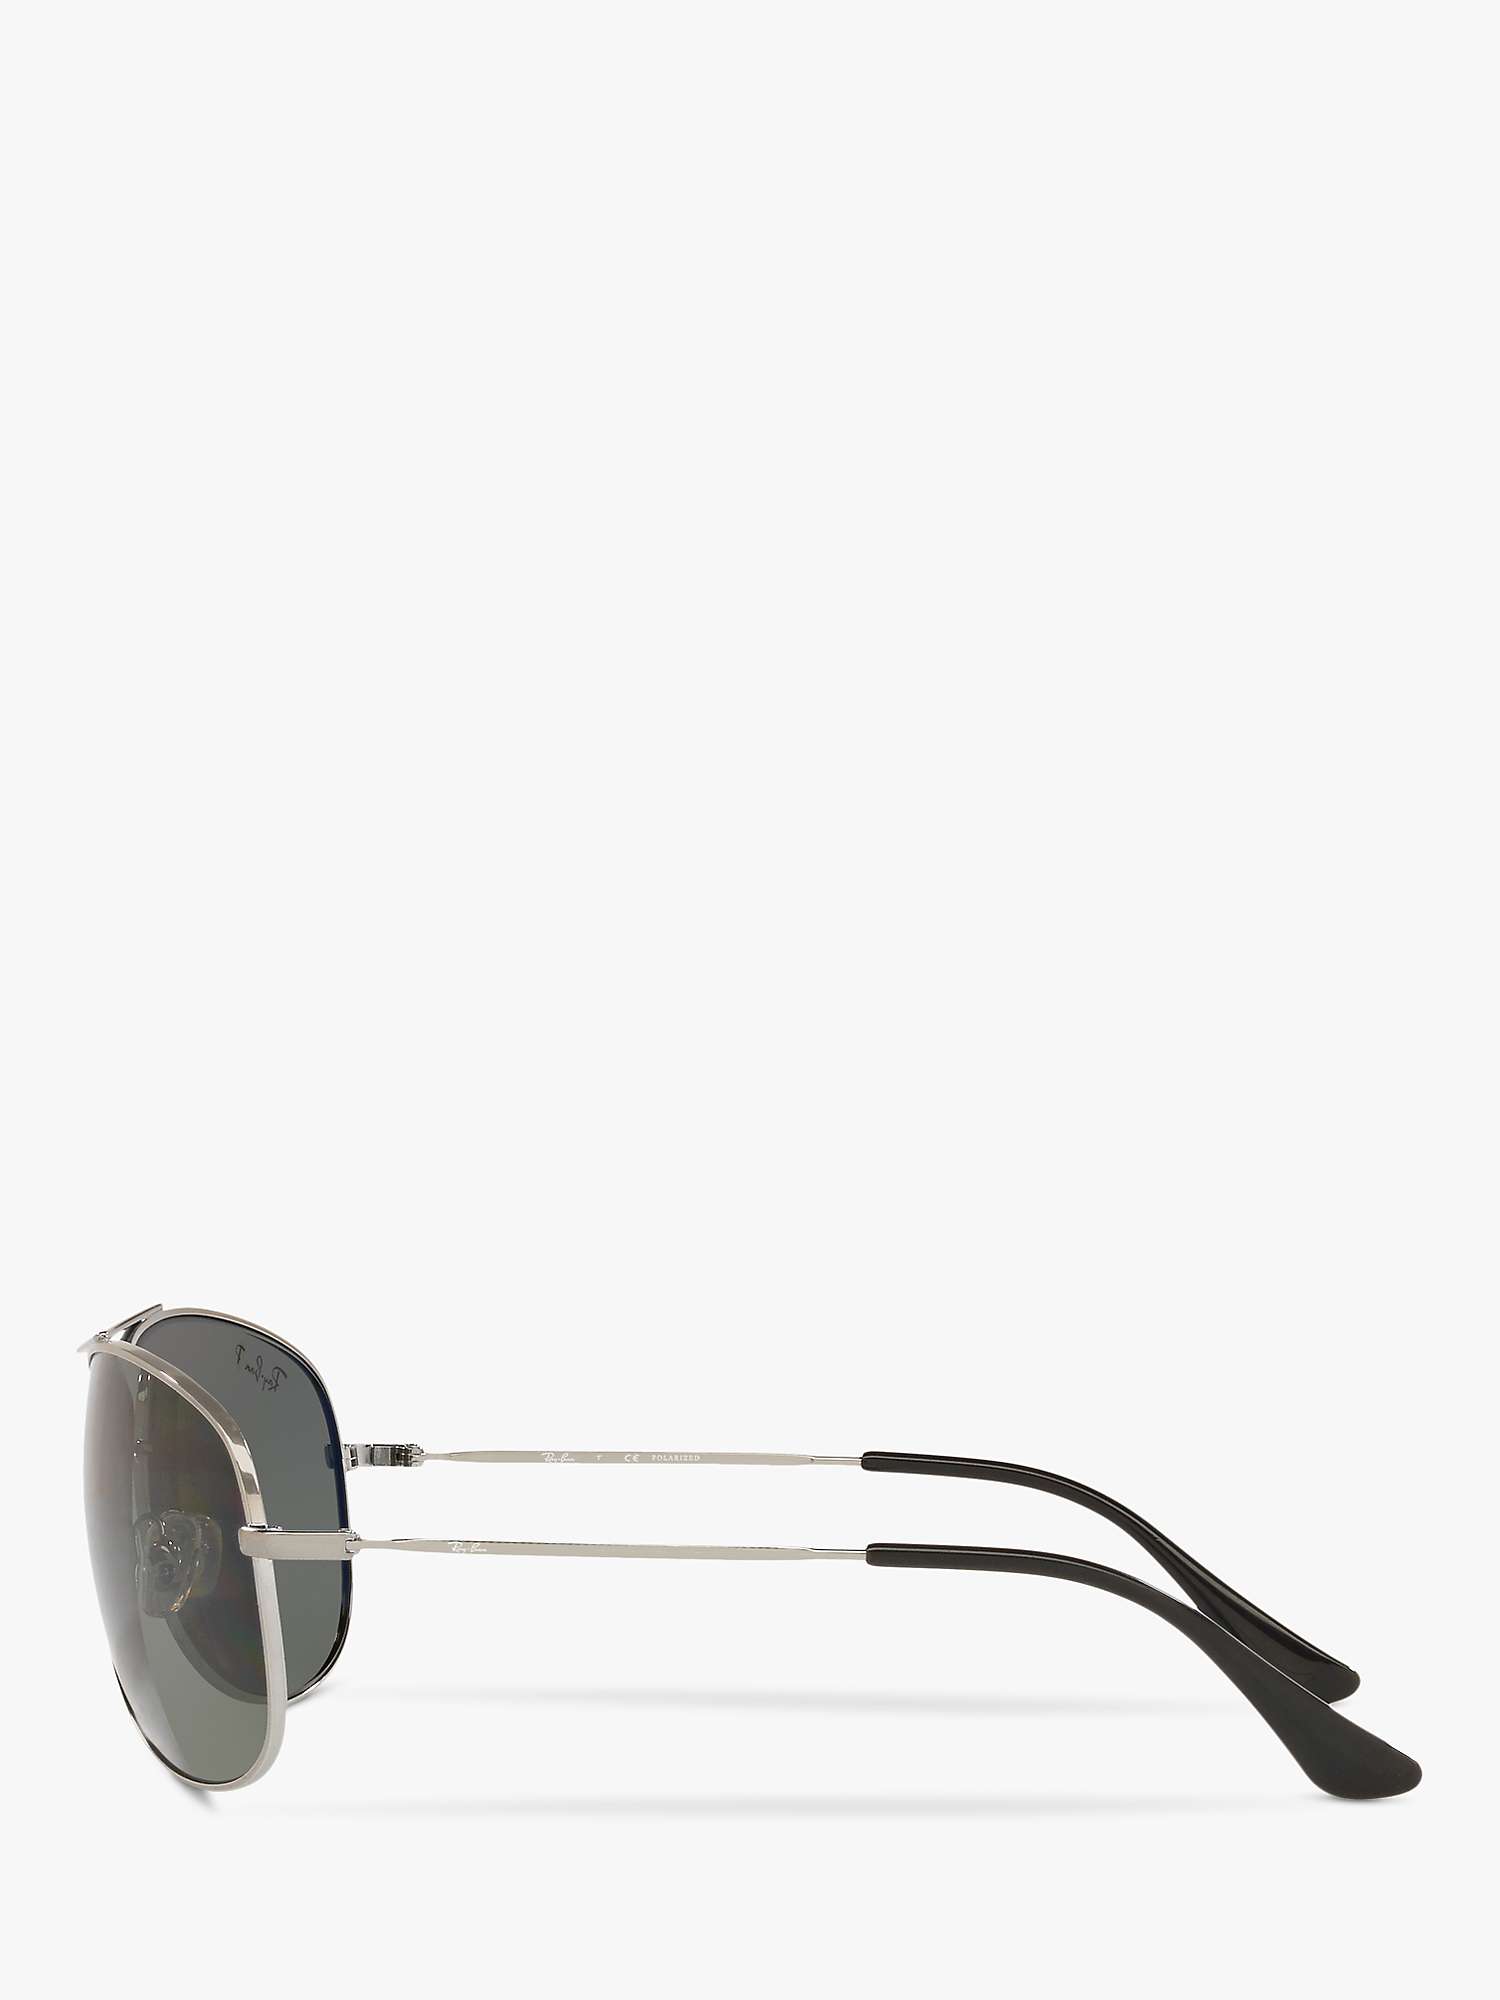 Buy Ray-Ban RB3293 Men's Polarised Aviator Sunglasses, Gunmetal/Green Online at johnlewis.com